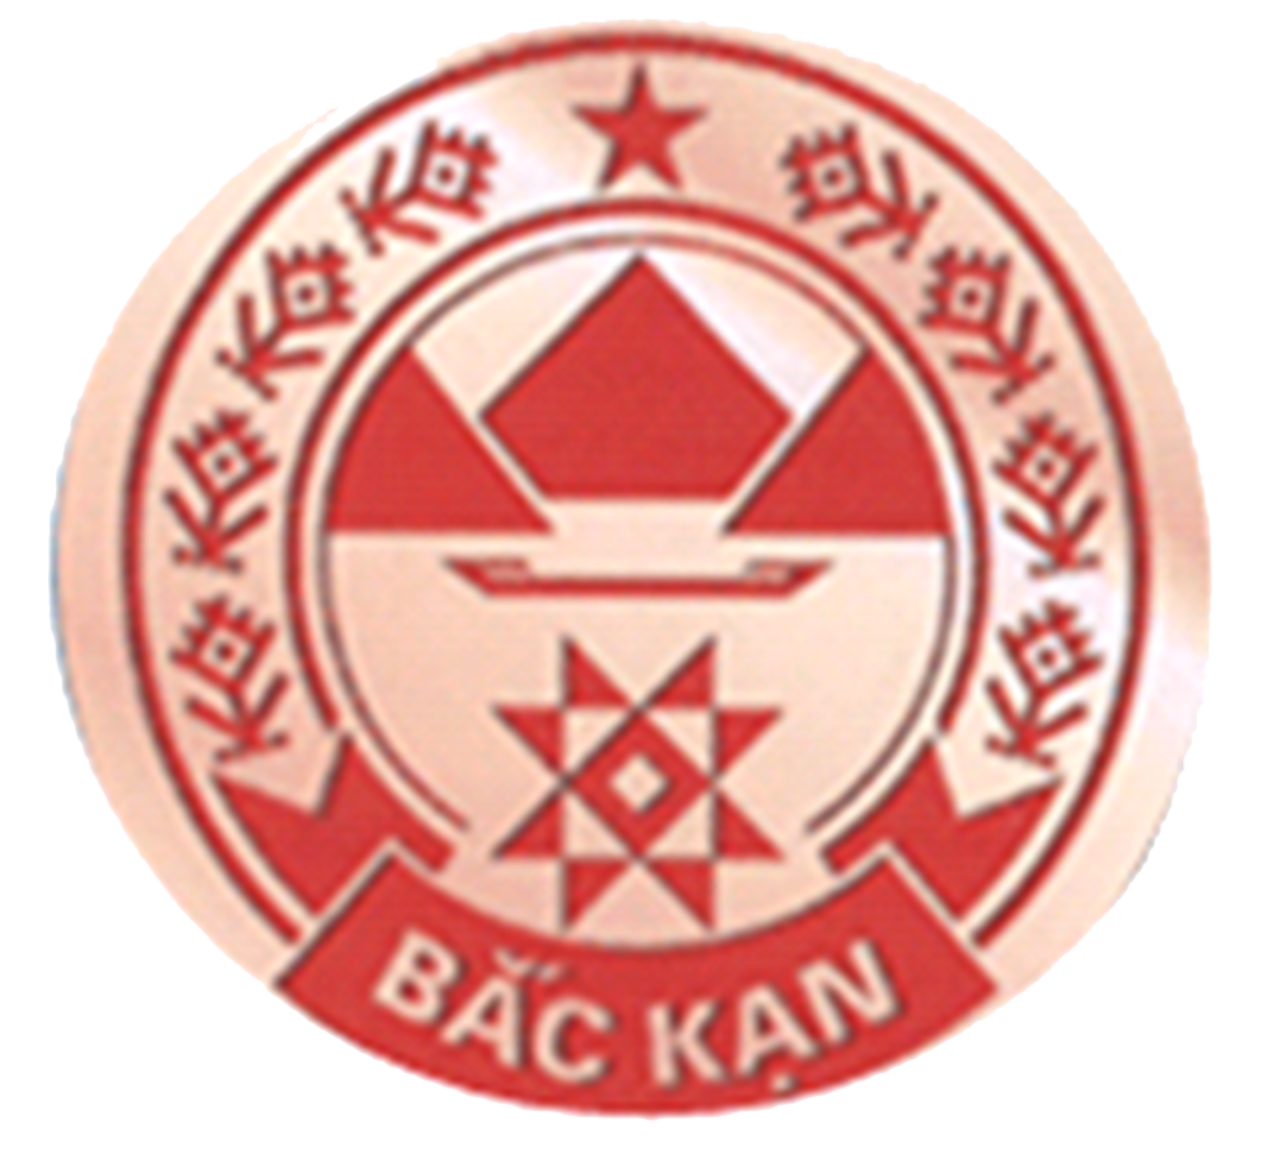 Logo Bac Kan.PNG